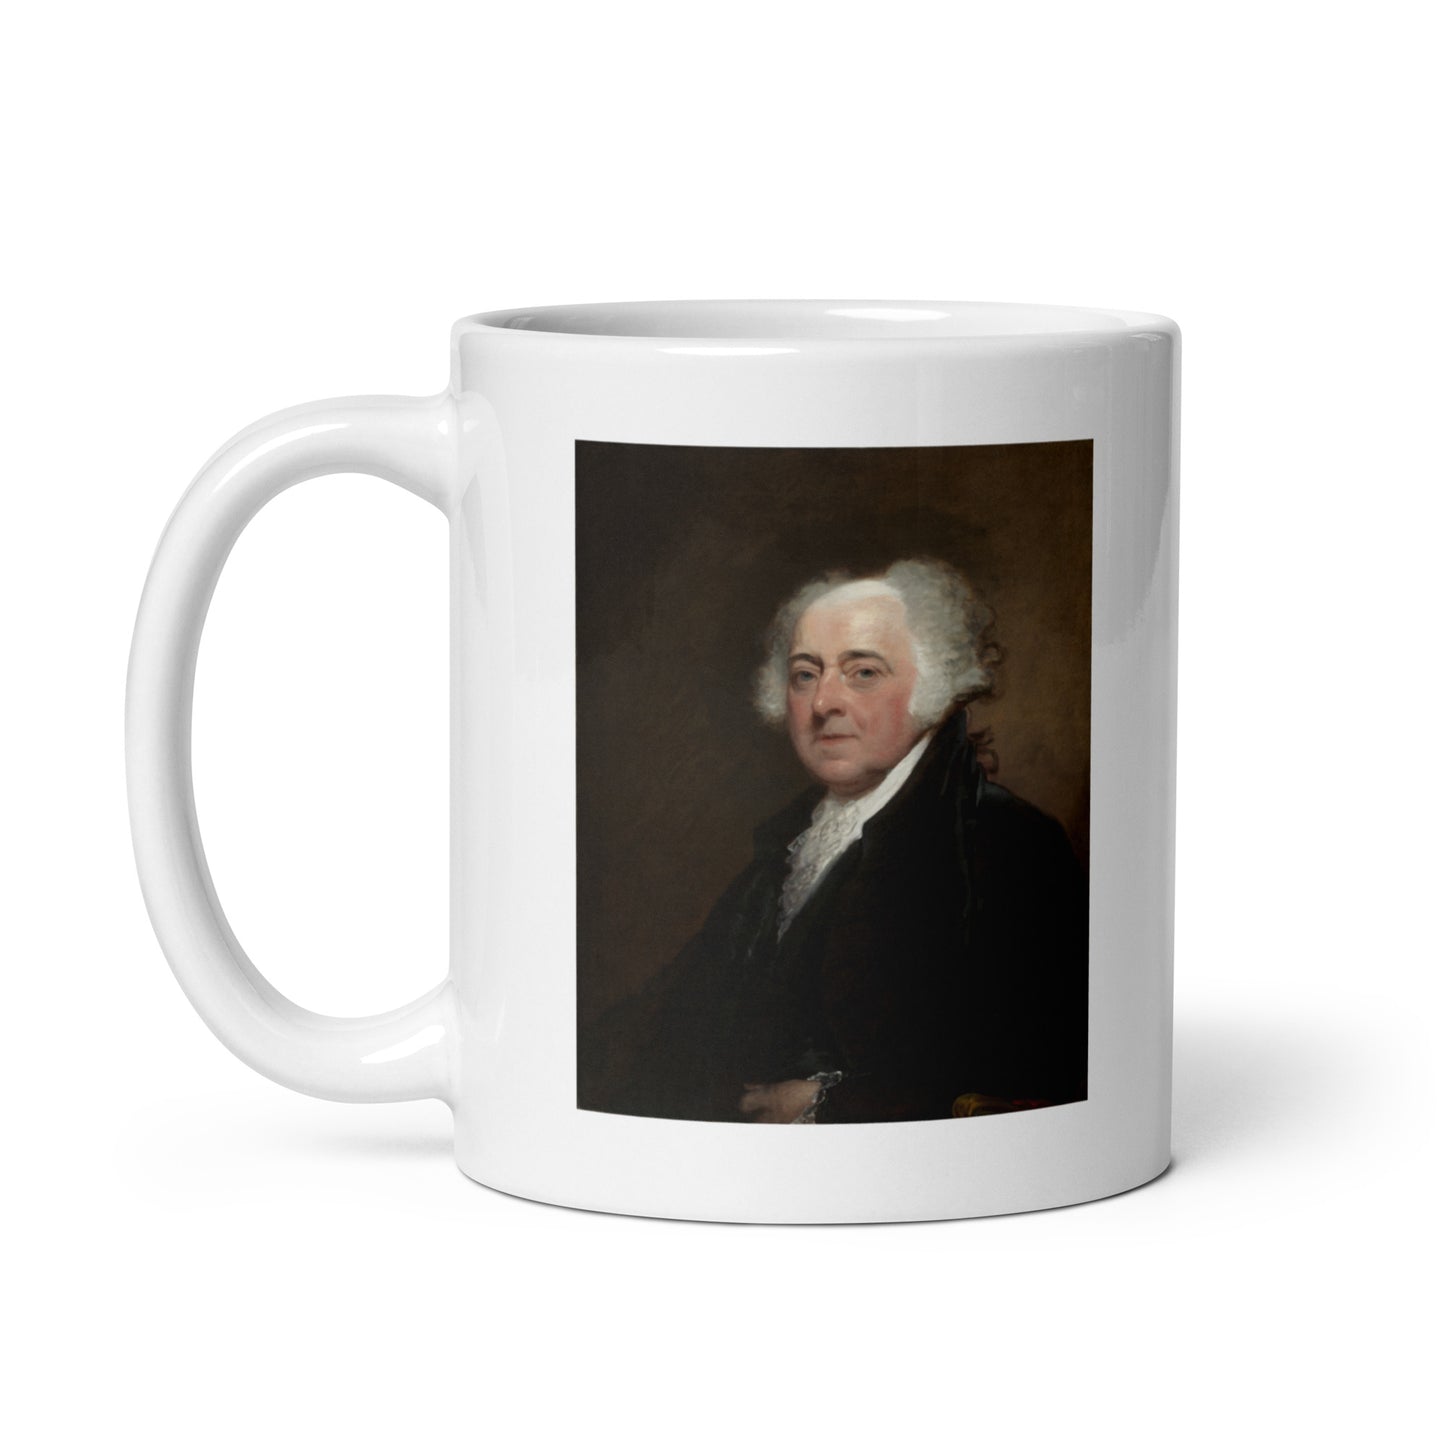 John Adams white glossy mug